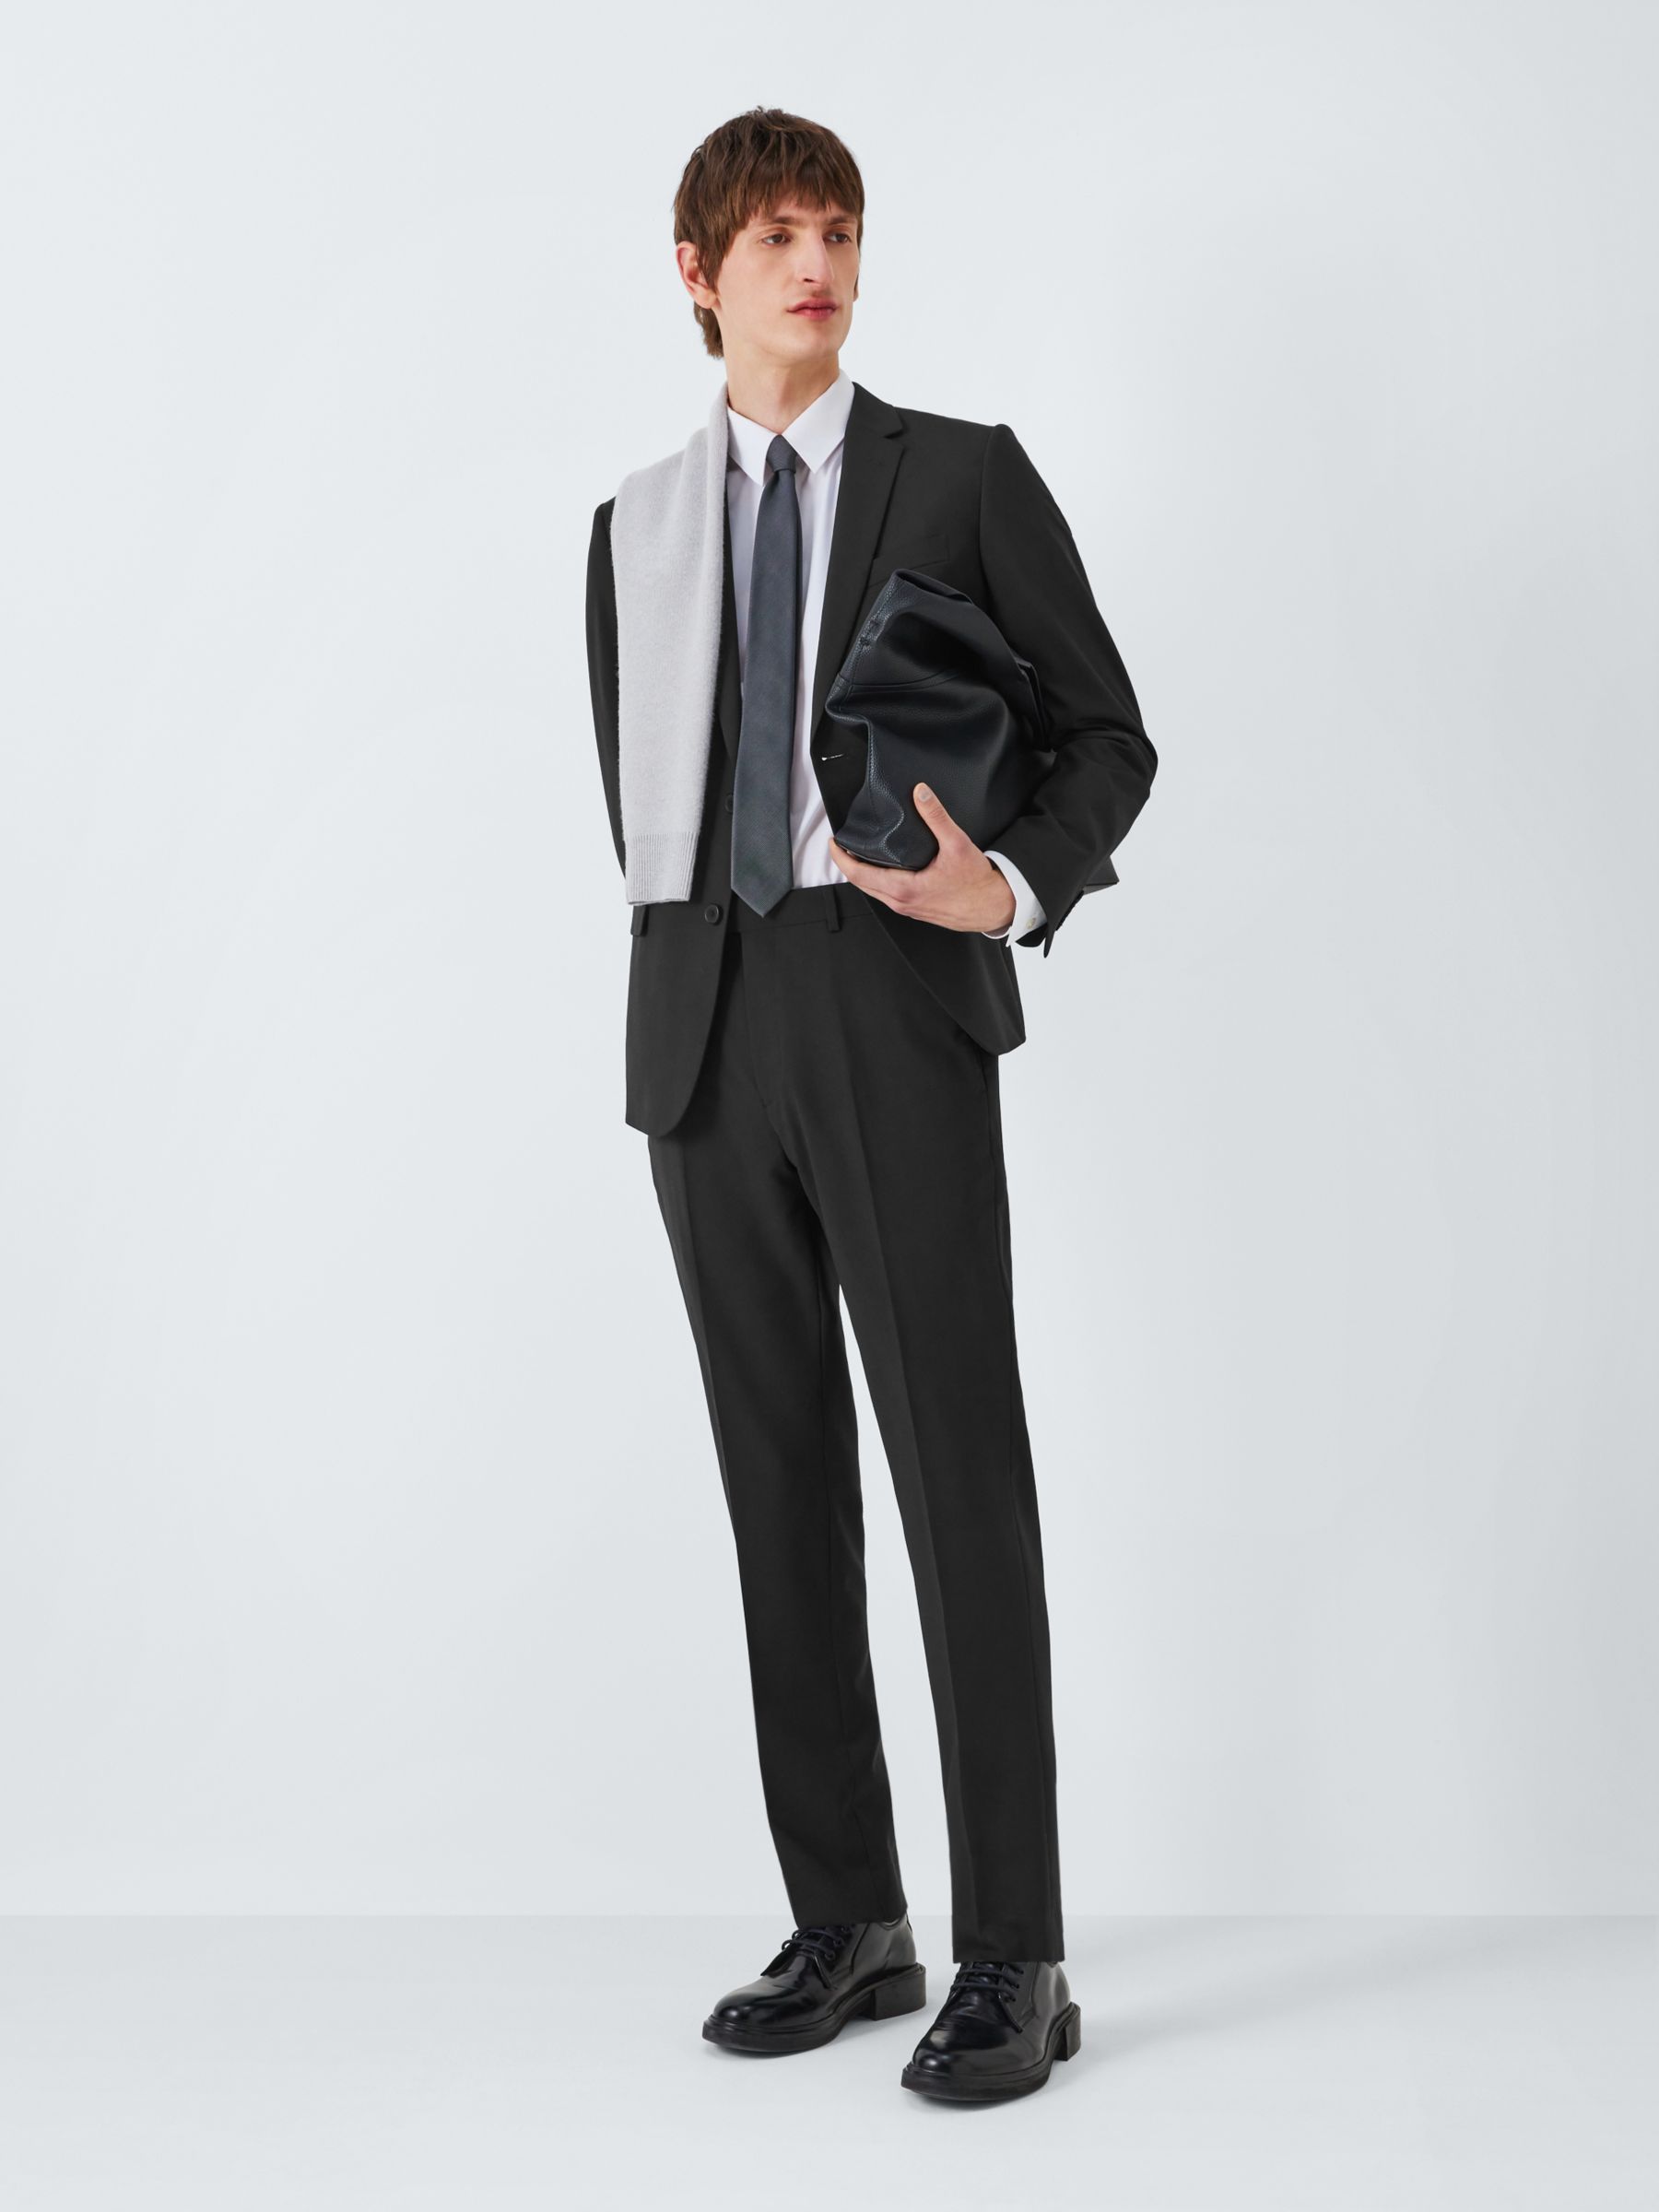 Kin Wool Blend Slim Fit Notch Lapel Suit Jacket, Black, 36R